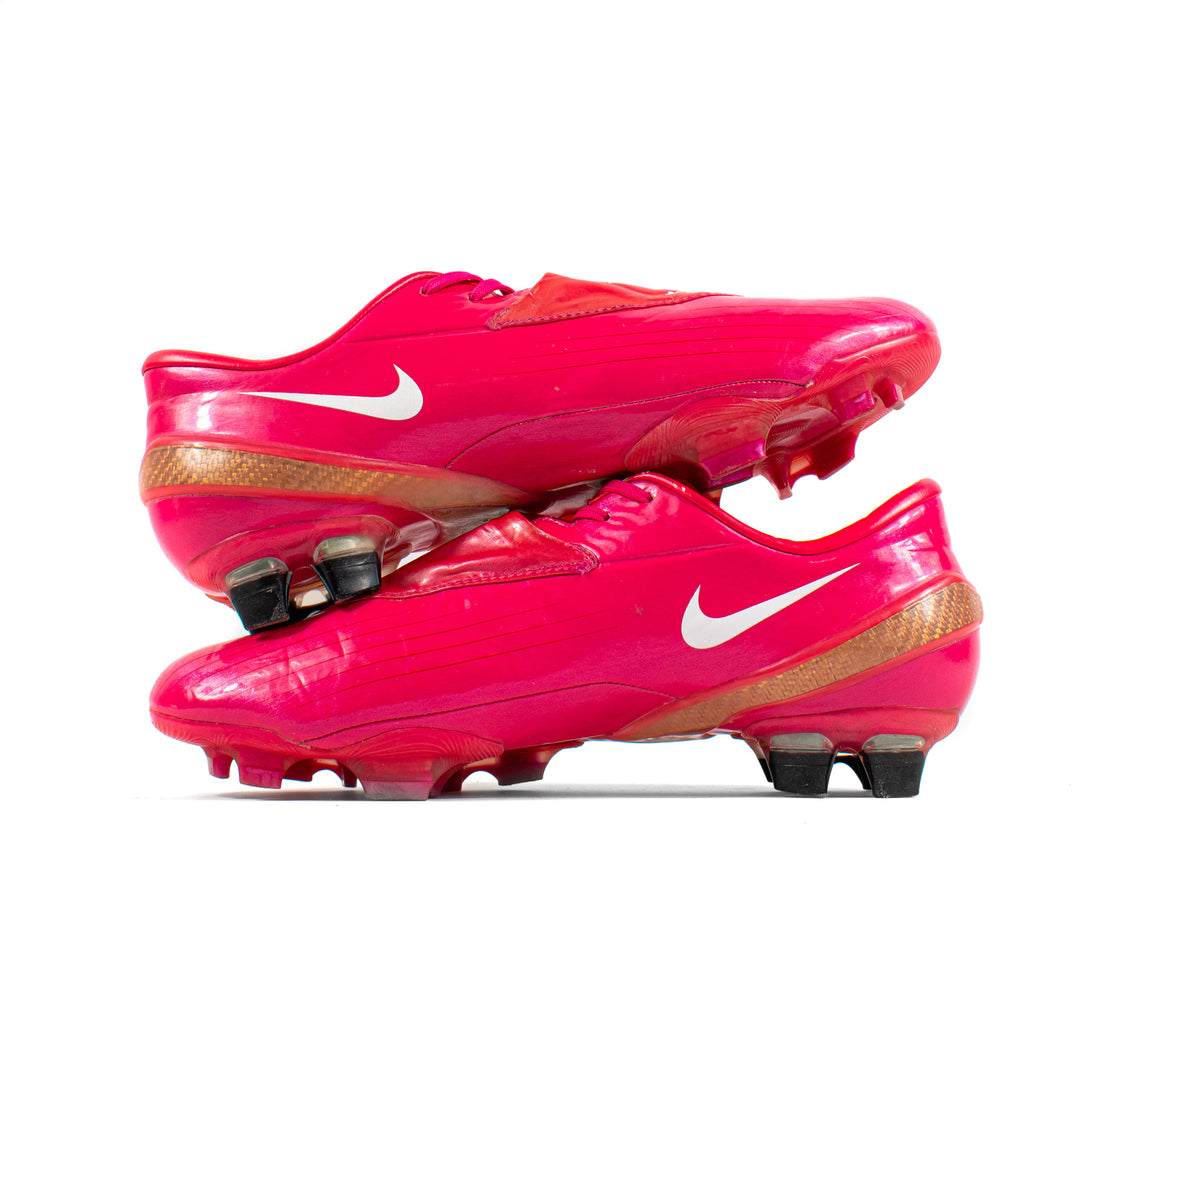 Digital dar a entender mensual Nike Mercurial Vapor IV Berry Rosa FG – Classic Soccer Cleats